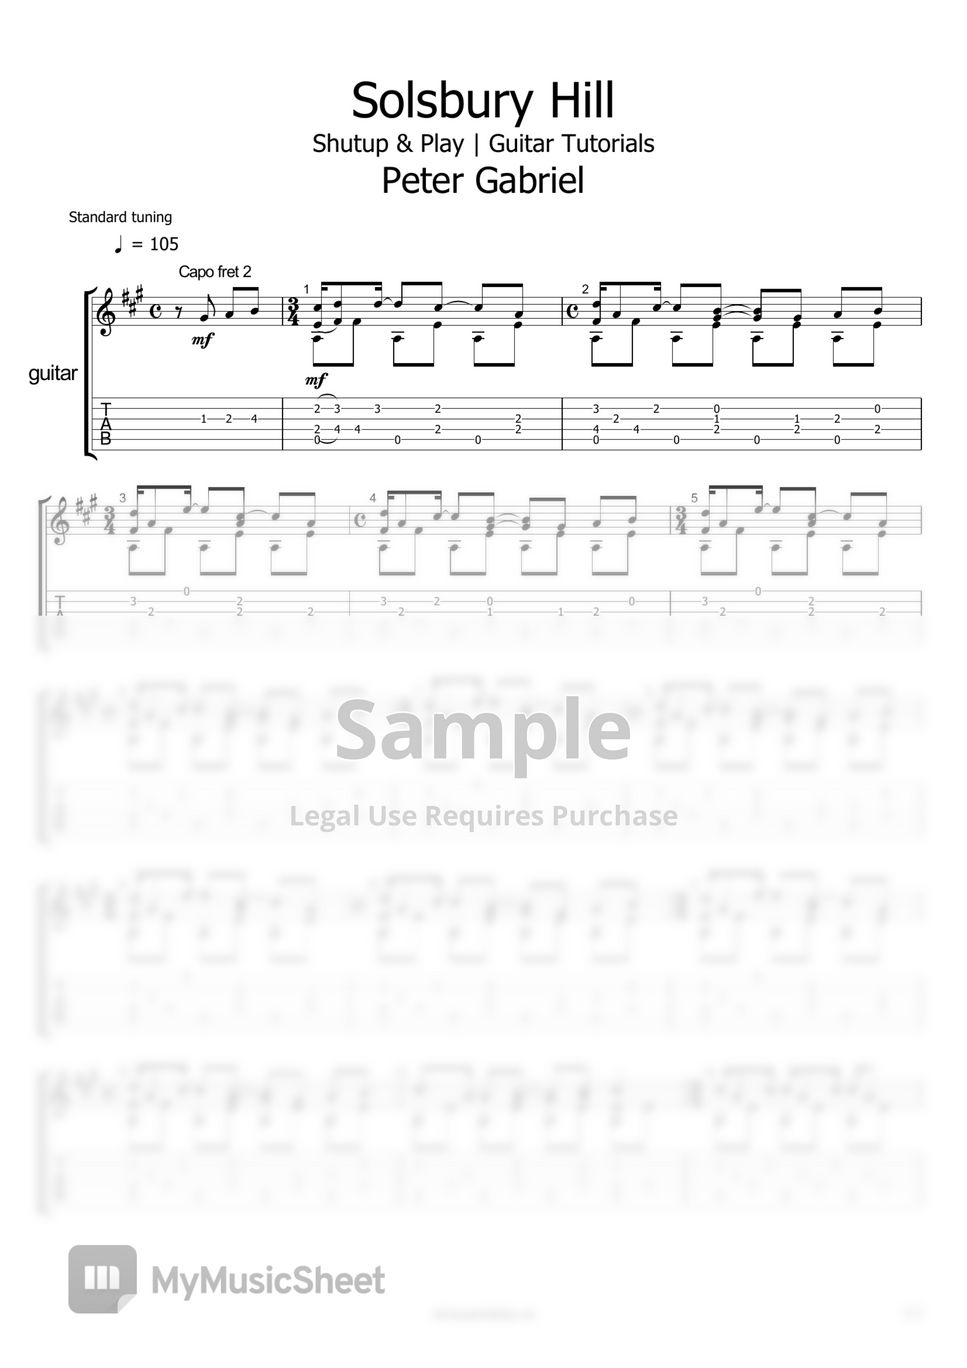 Peter Gabriel - Solsbury Hill by Shutup & Play | Guitar Tutorials